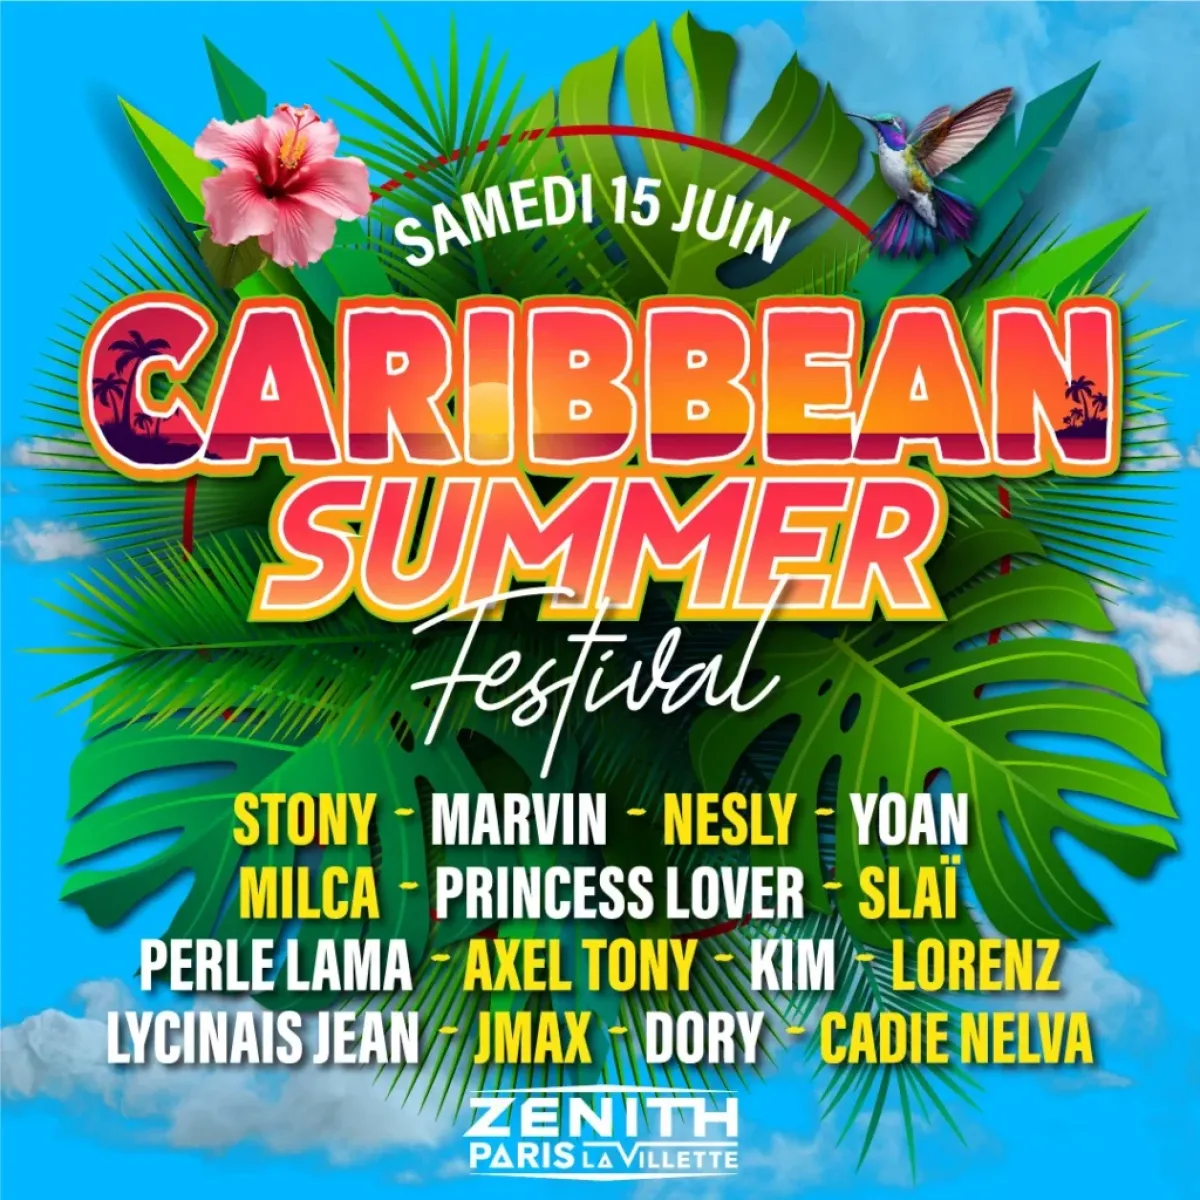 Caribbean Summer Festival at Zenith Paris Tickets